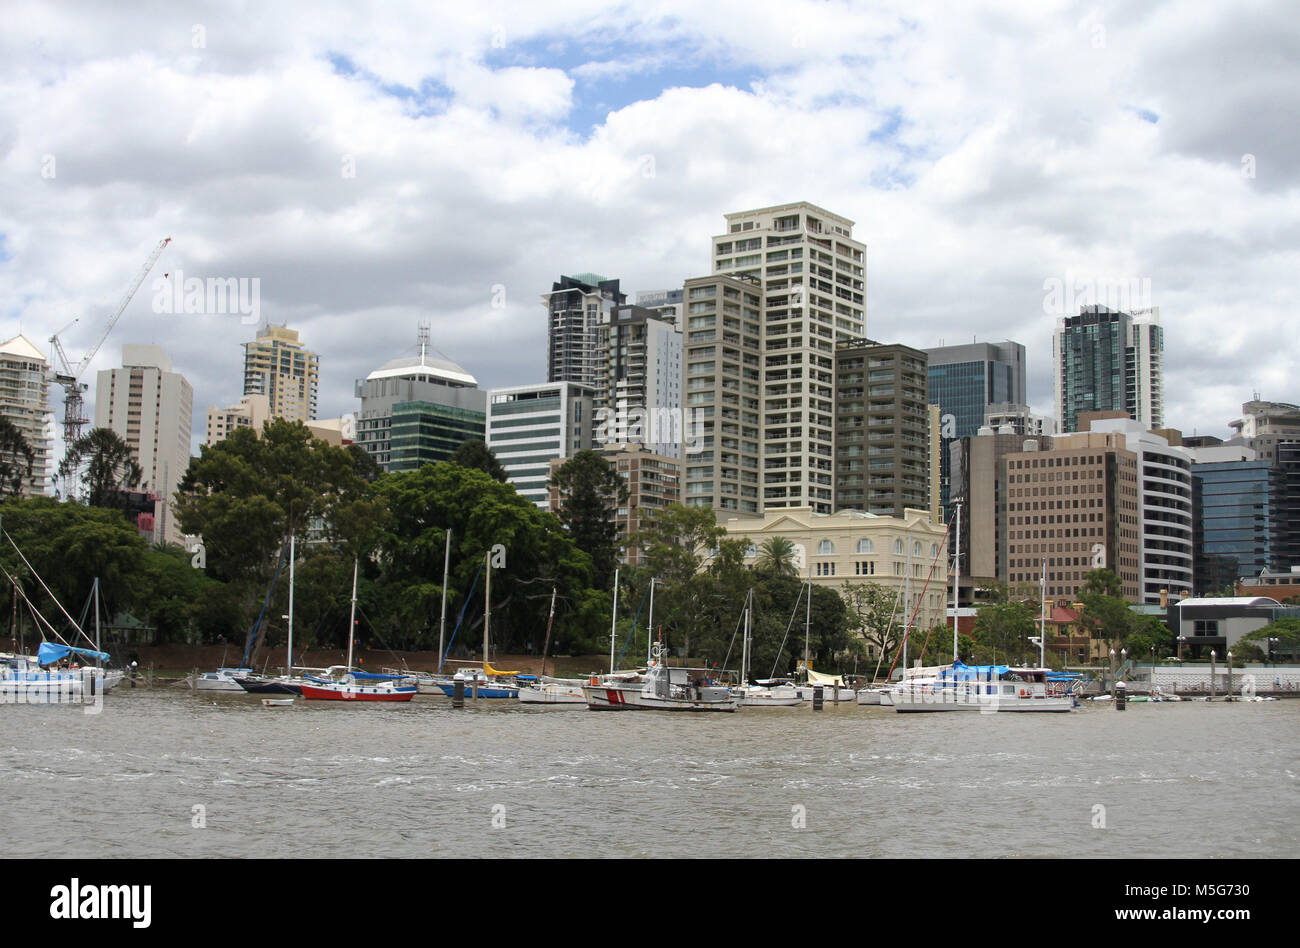 Cityscape of Brisbane CBD with Brisbane River in the foreground, Brisbane, Australia Stock Photo